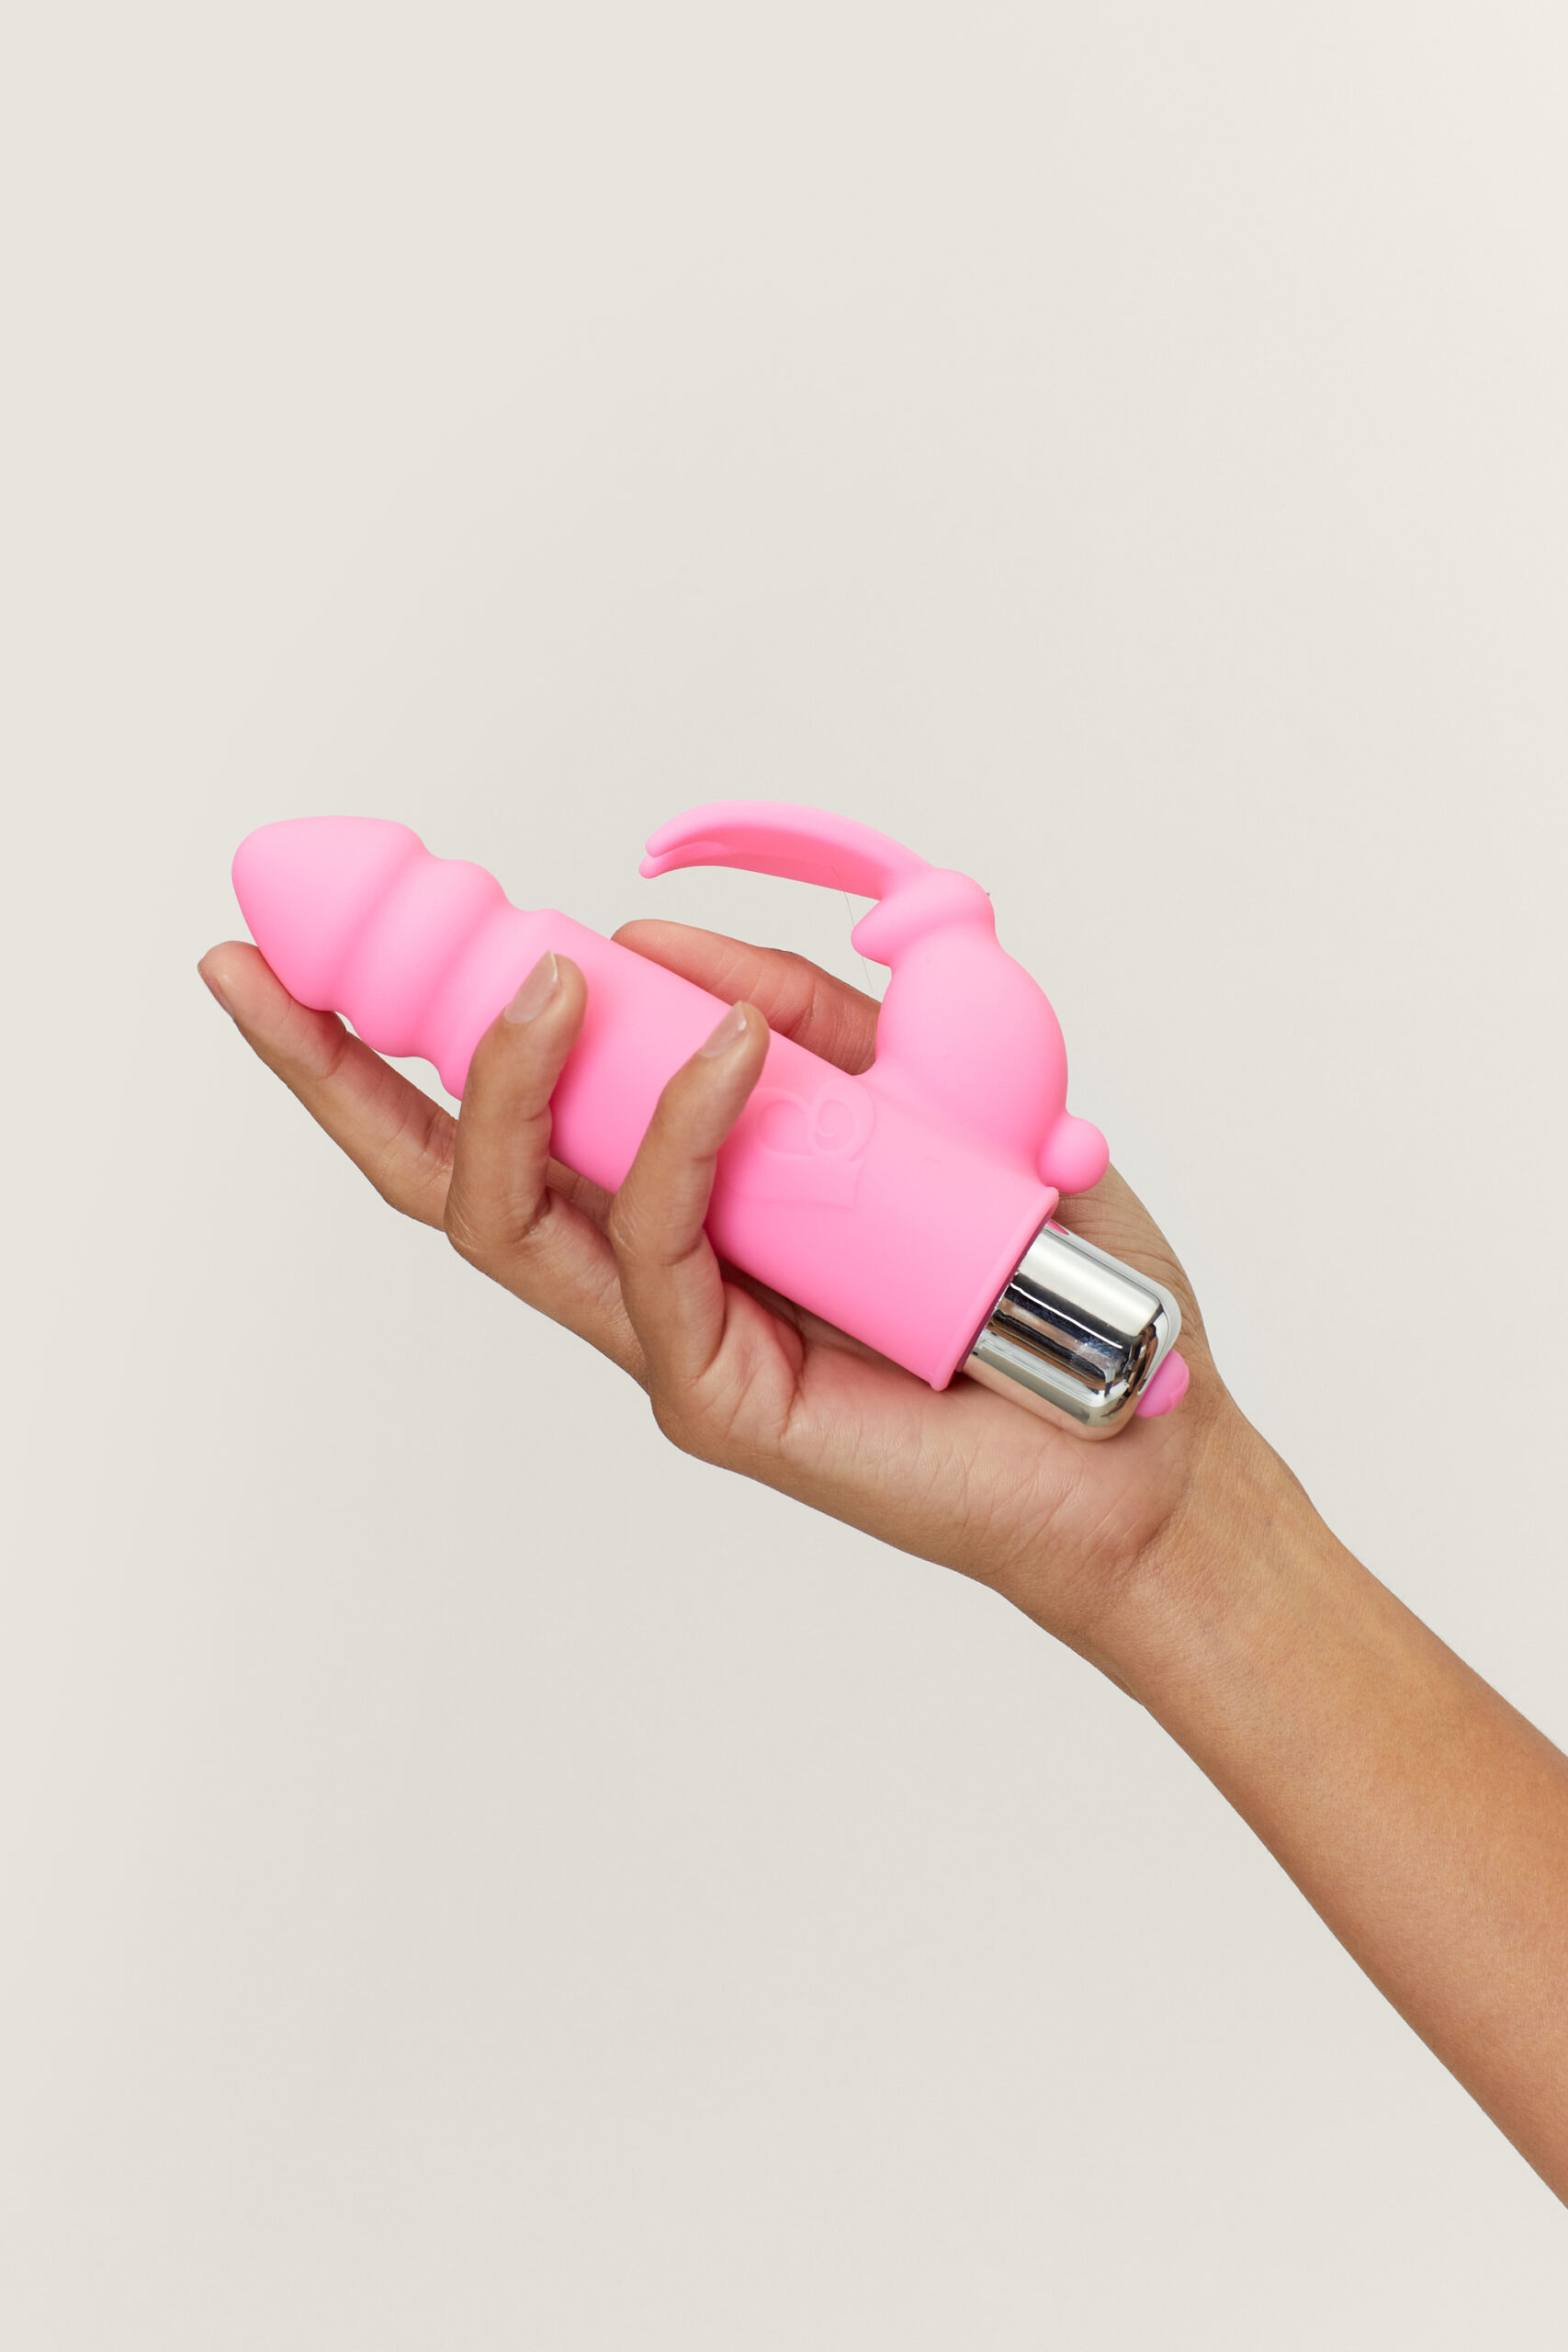 10 Speed Mini Rabbit Bullet Vibrator Sex Toy